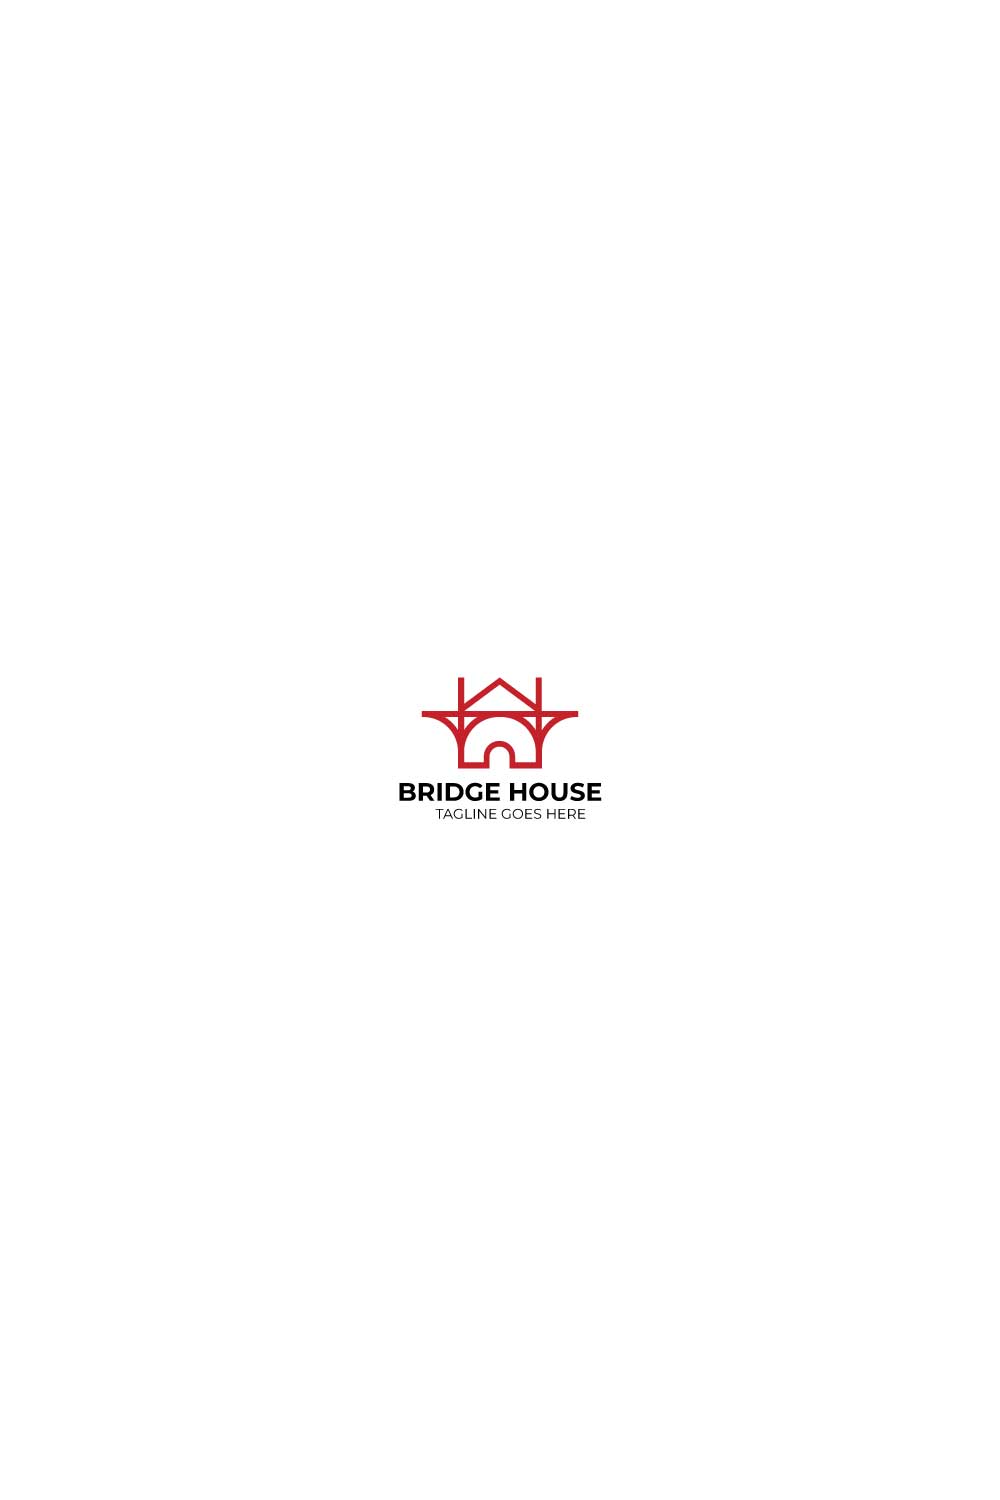 Professional Bridge House Logo design pinterest preview image.